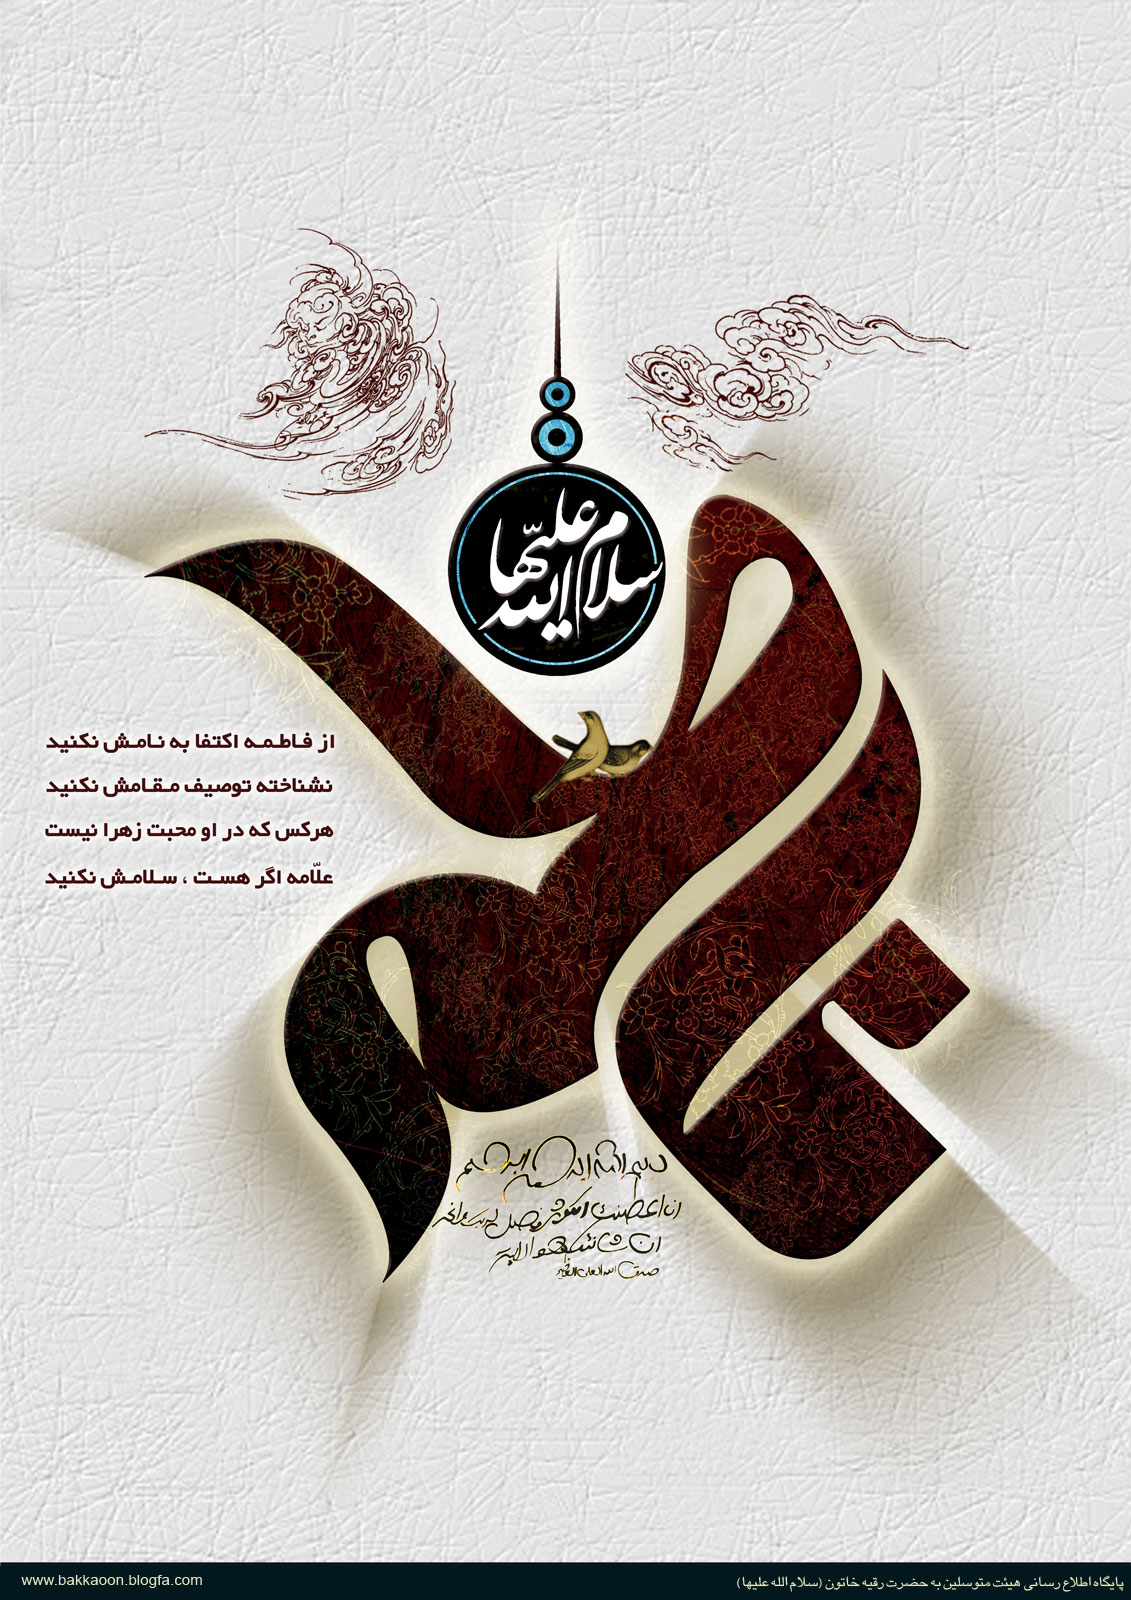 Free Download islamic wallpaper